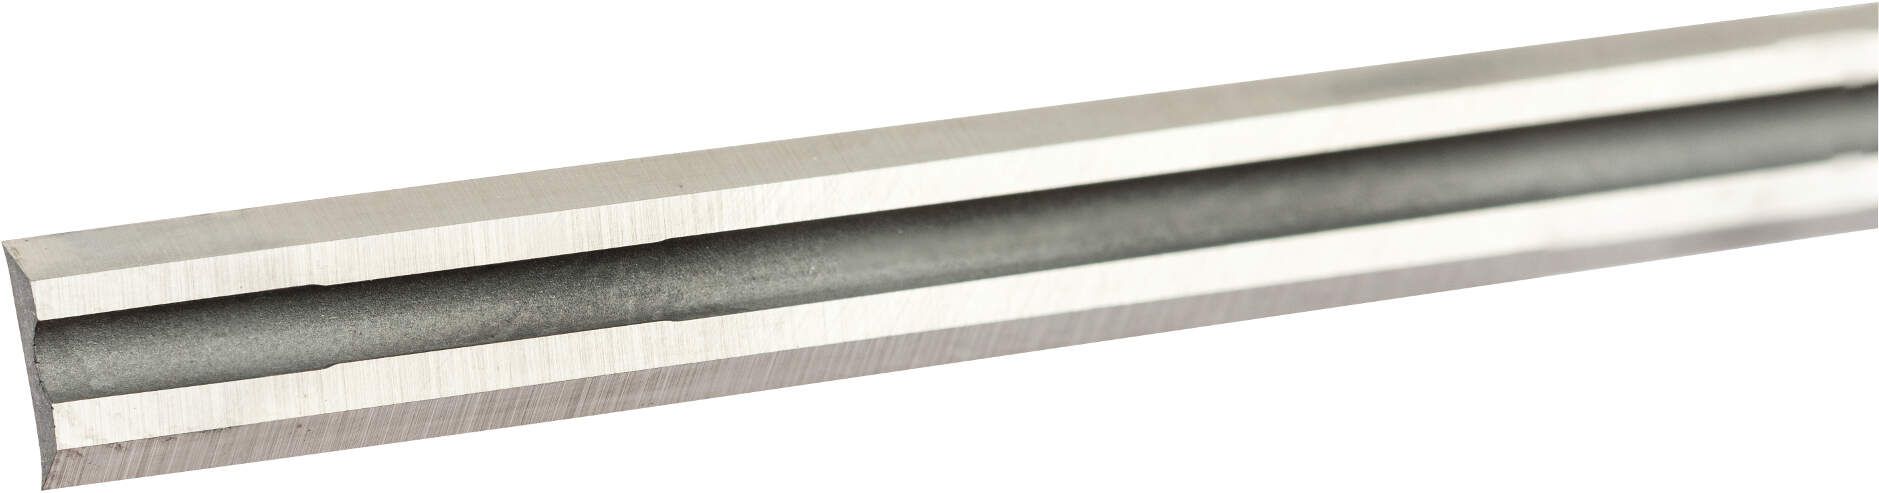 Bosch nož za rende 82mm, 2 komada, ravni, tvrdi metal - vidija, 40° - 2607000096